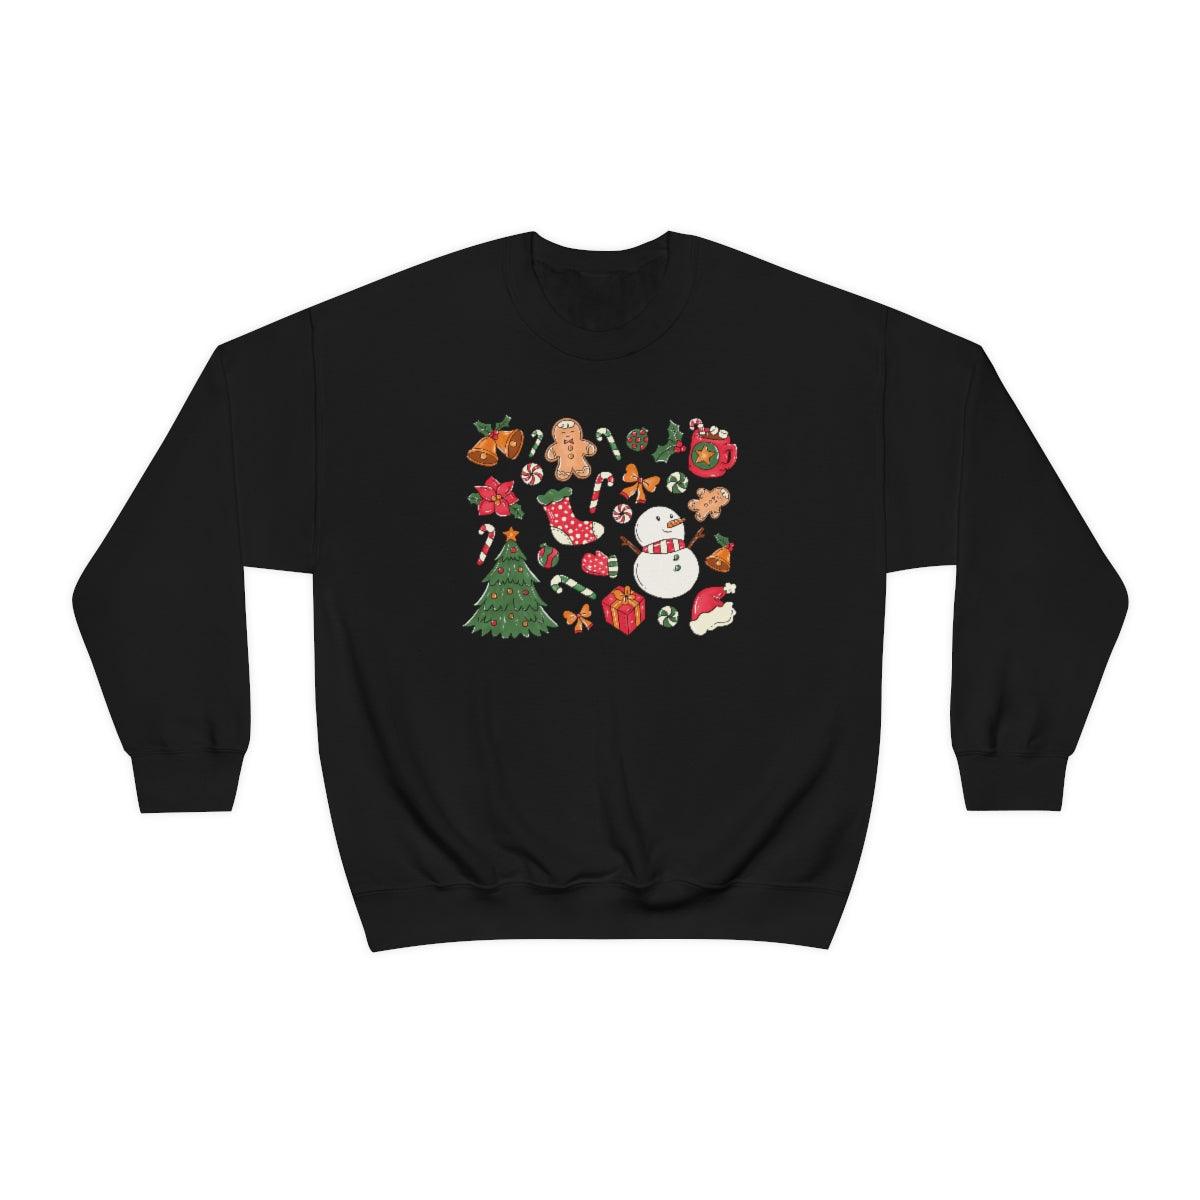 Christmas Cheer Christmas Crewneck Sweater - Crystal Rose Design Co.